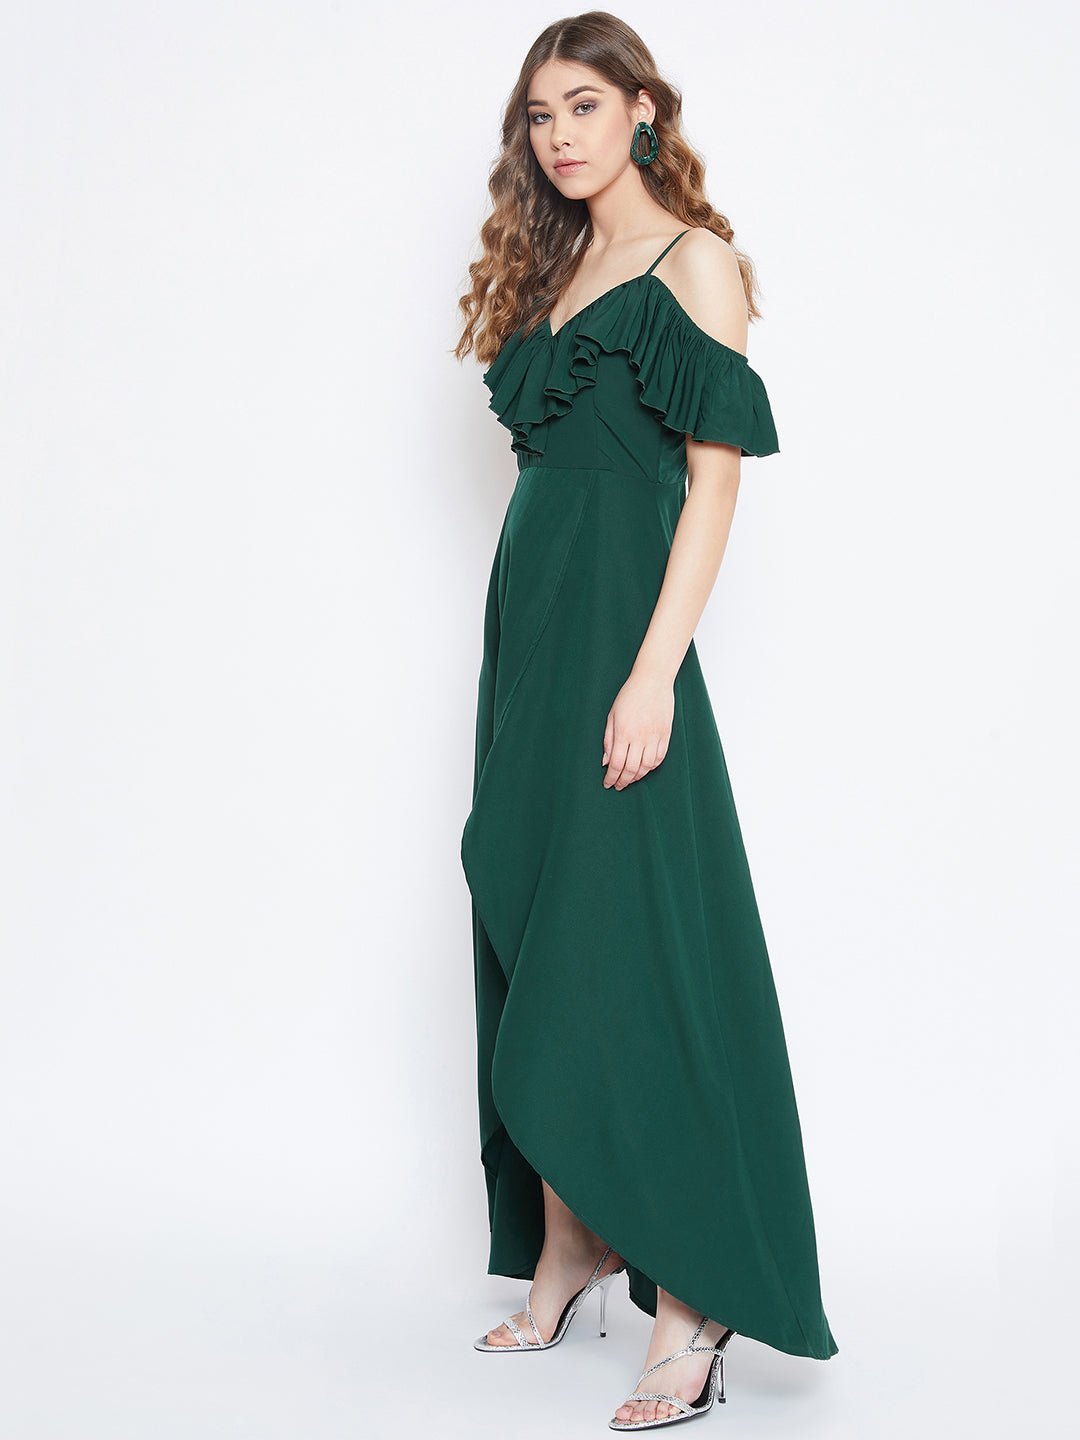 Folk Republic Women Solid Dark Green V-Neck Thigh-High Slit Frilled Maxi Dress - #folk republic#